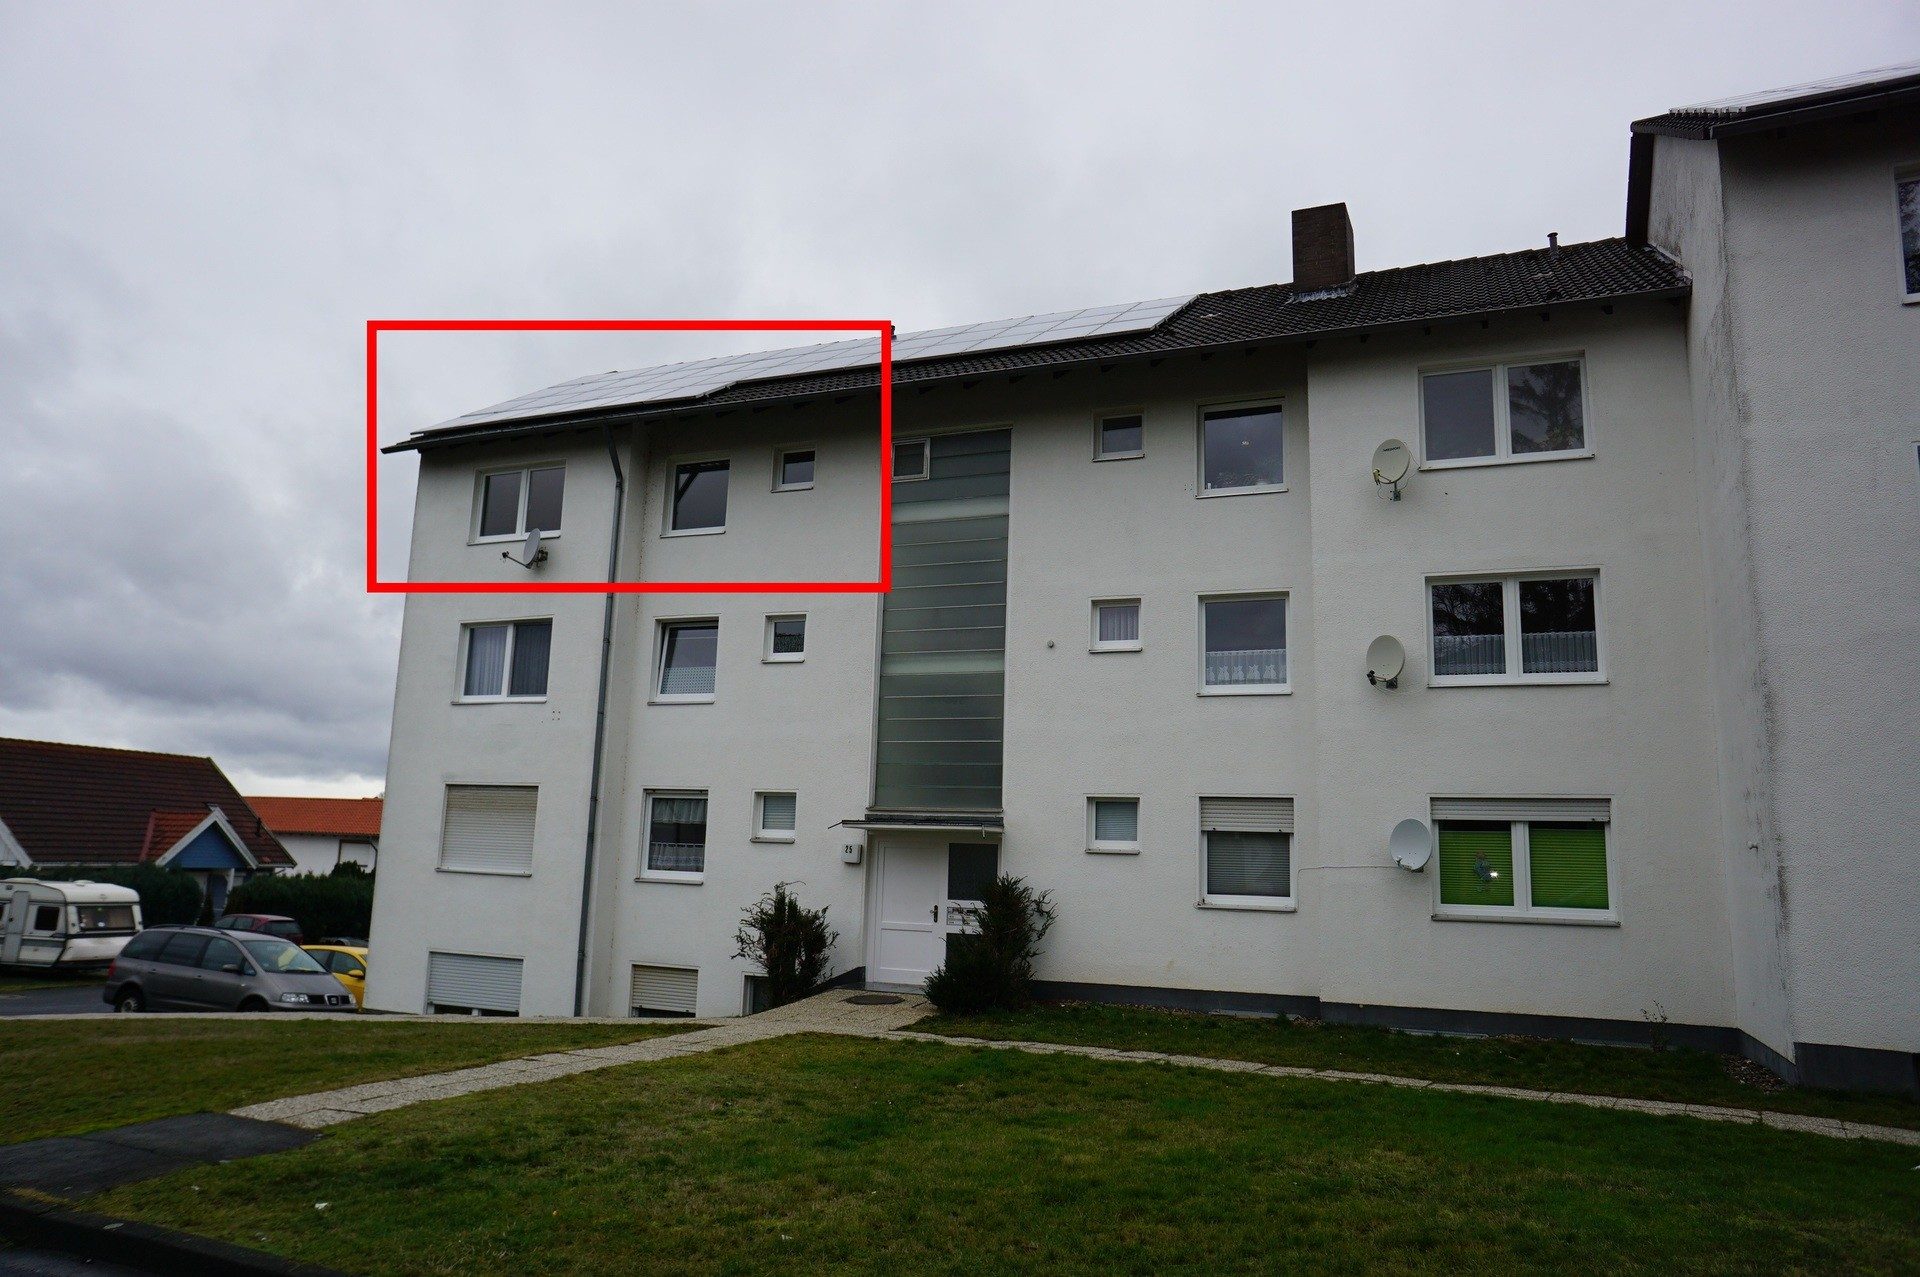 Immobilienangebot - Felsberg - Alle - Helle 4-Zimmerwohnung mit Balkon in Felsberg-Gensungen!